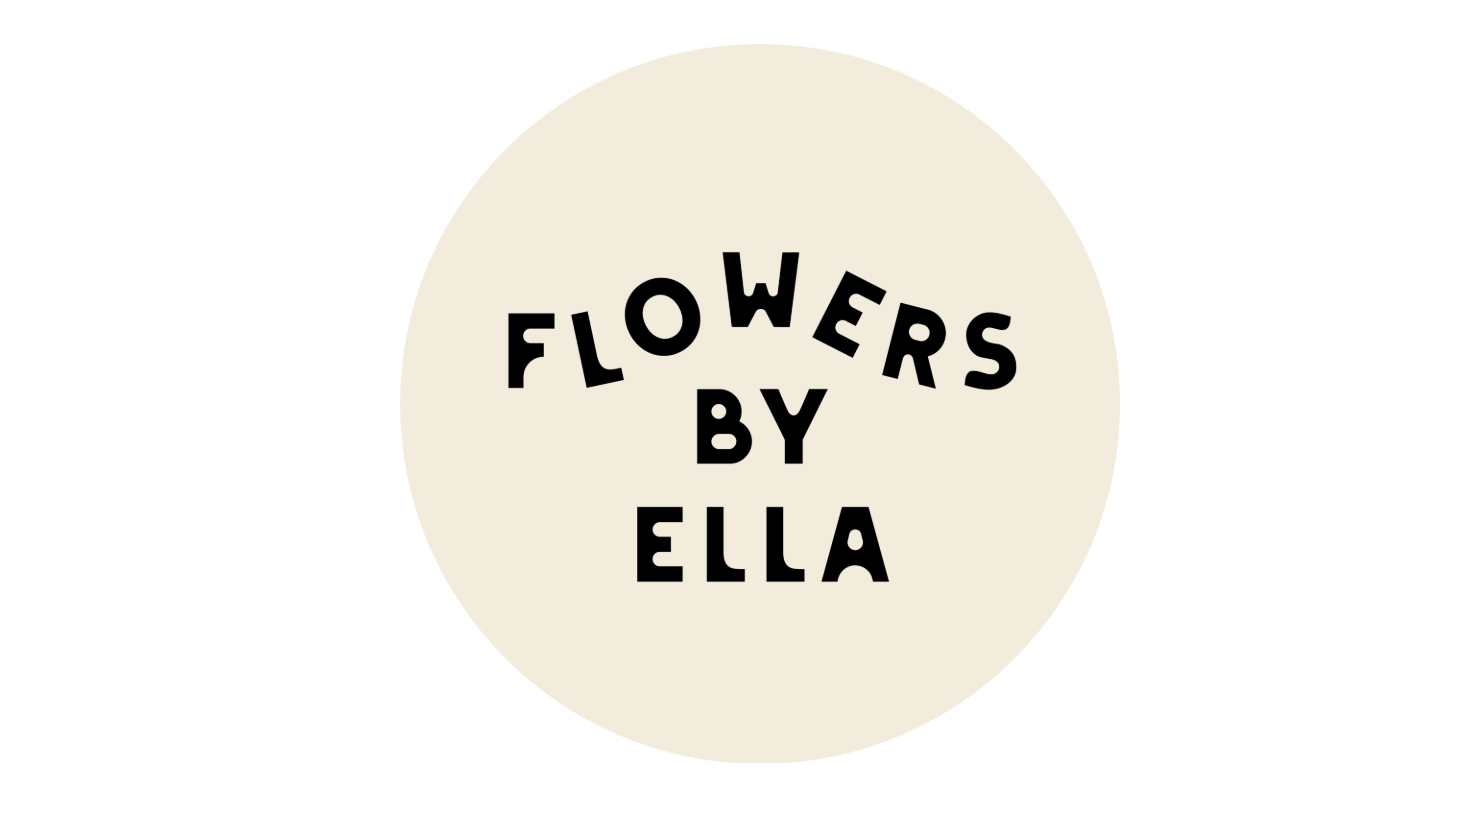 Flowers by Ella